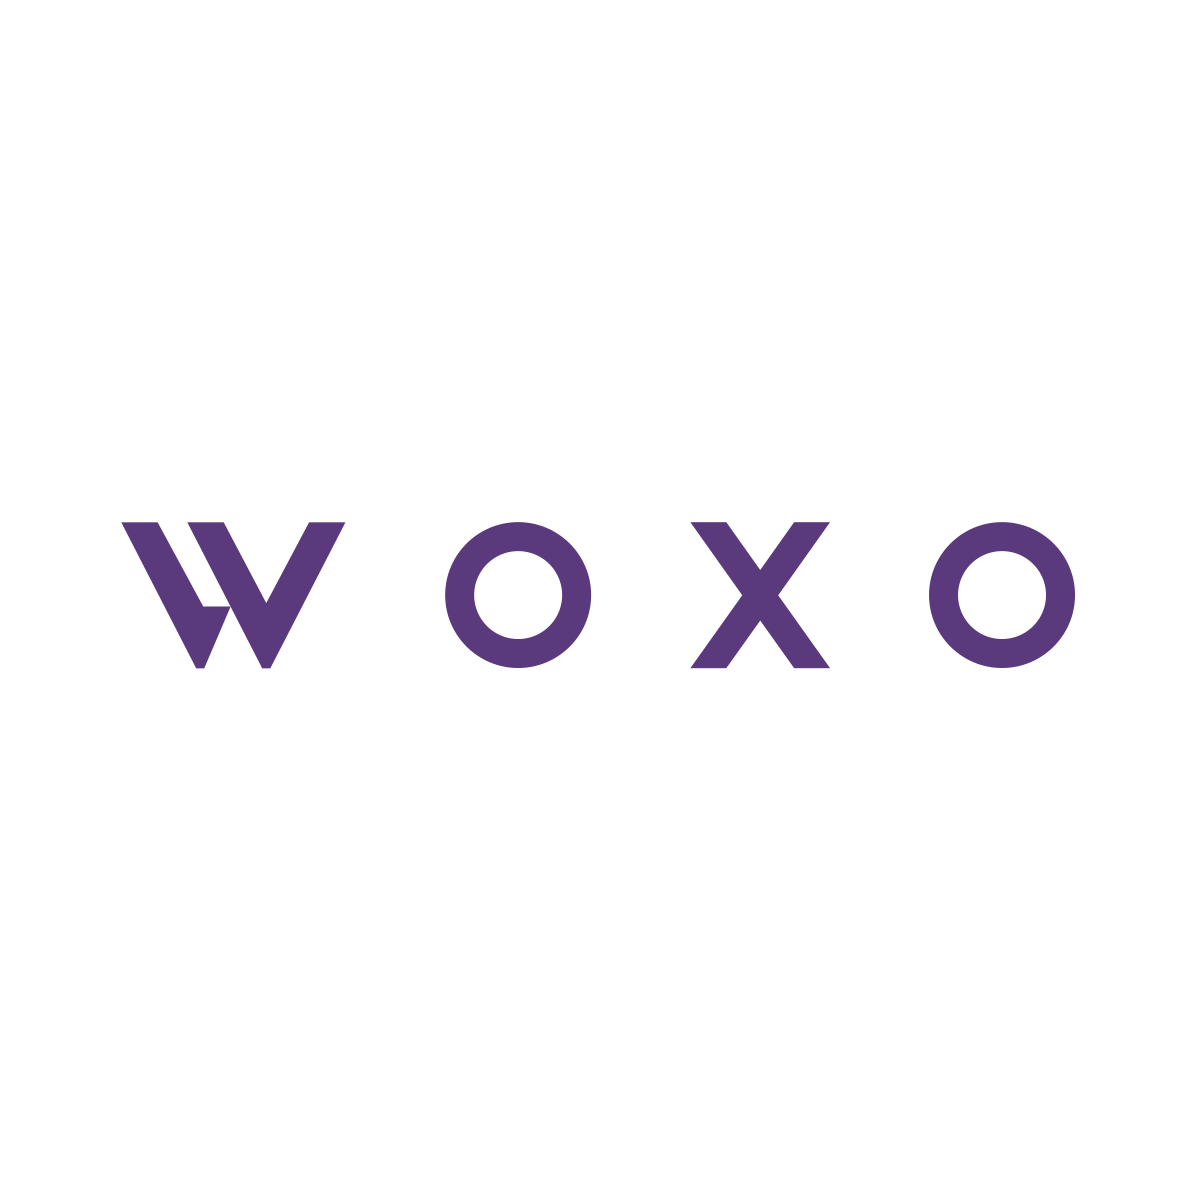 WOXO impressions